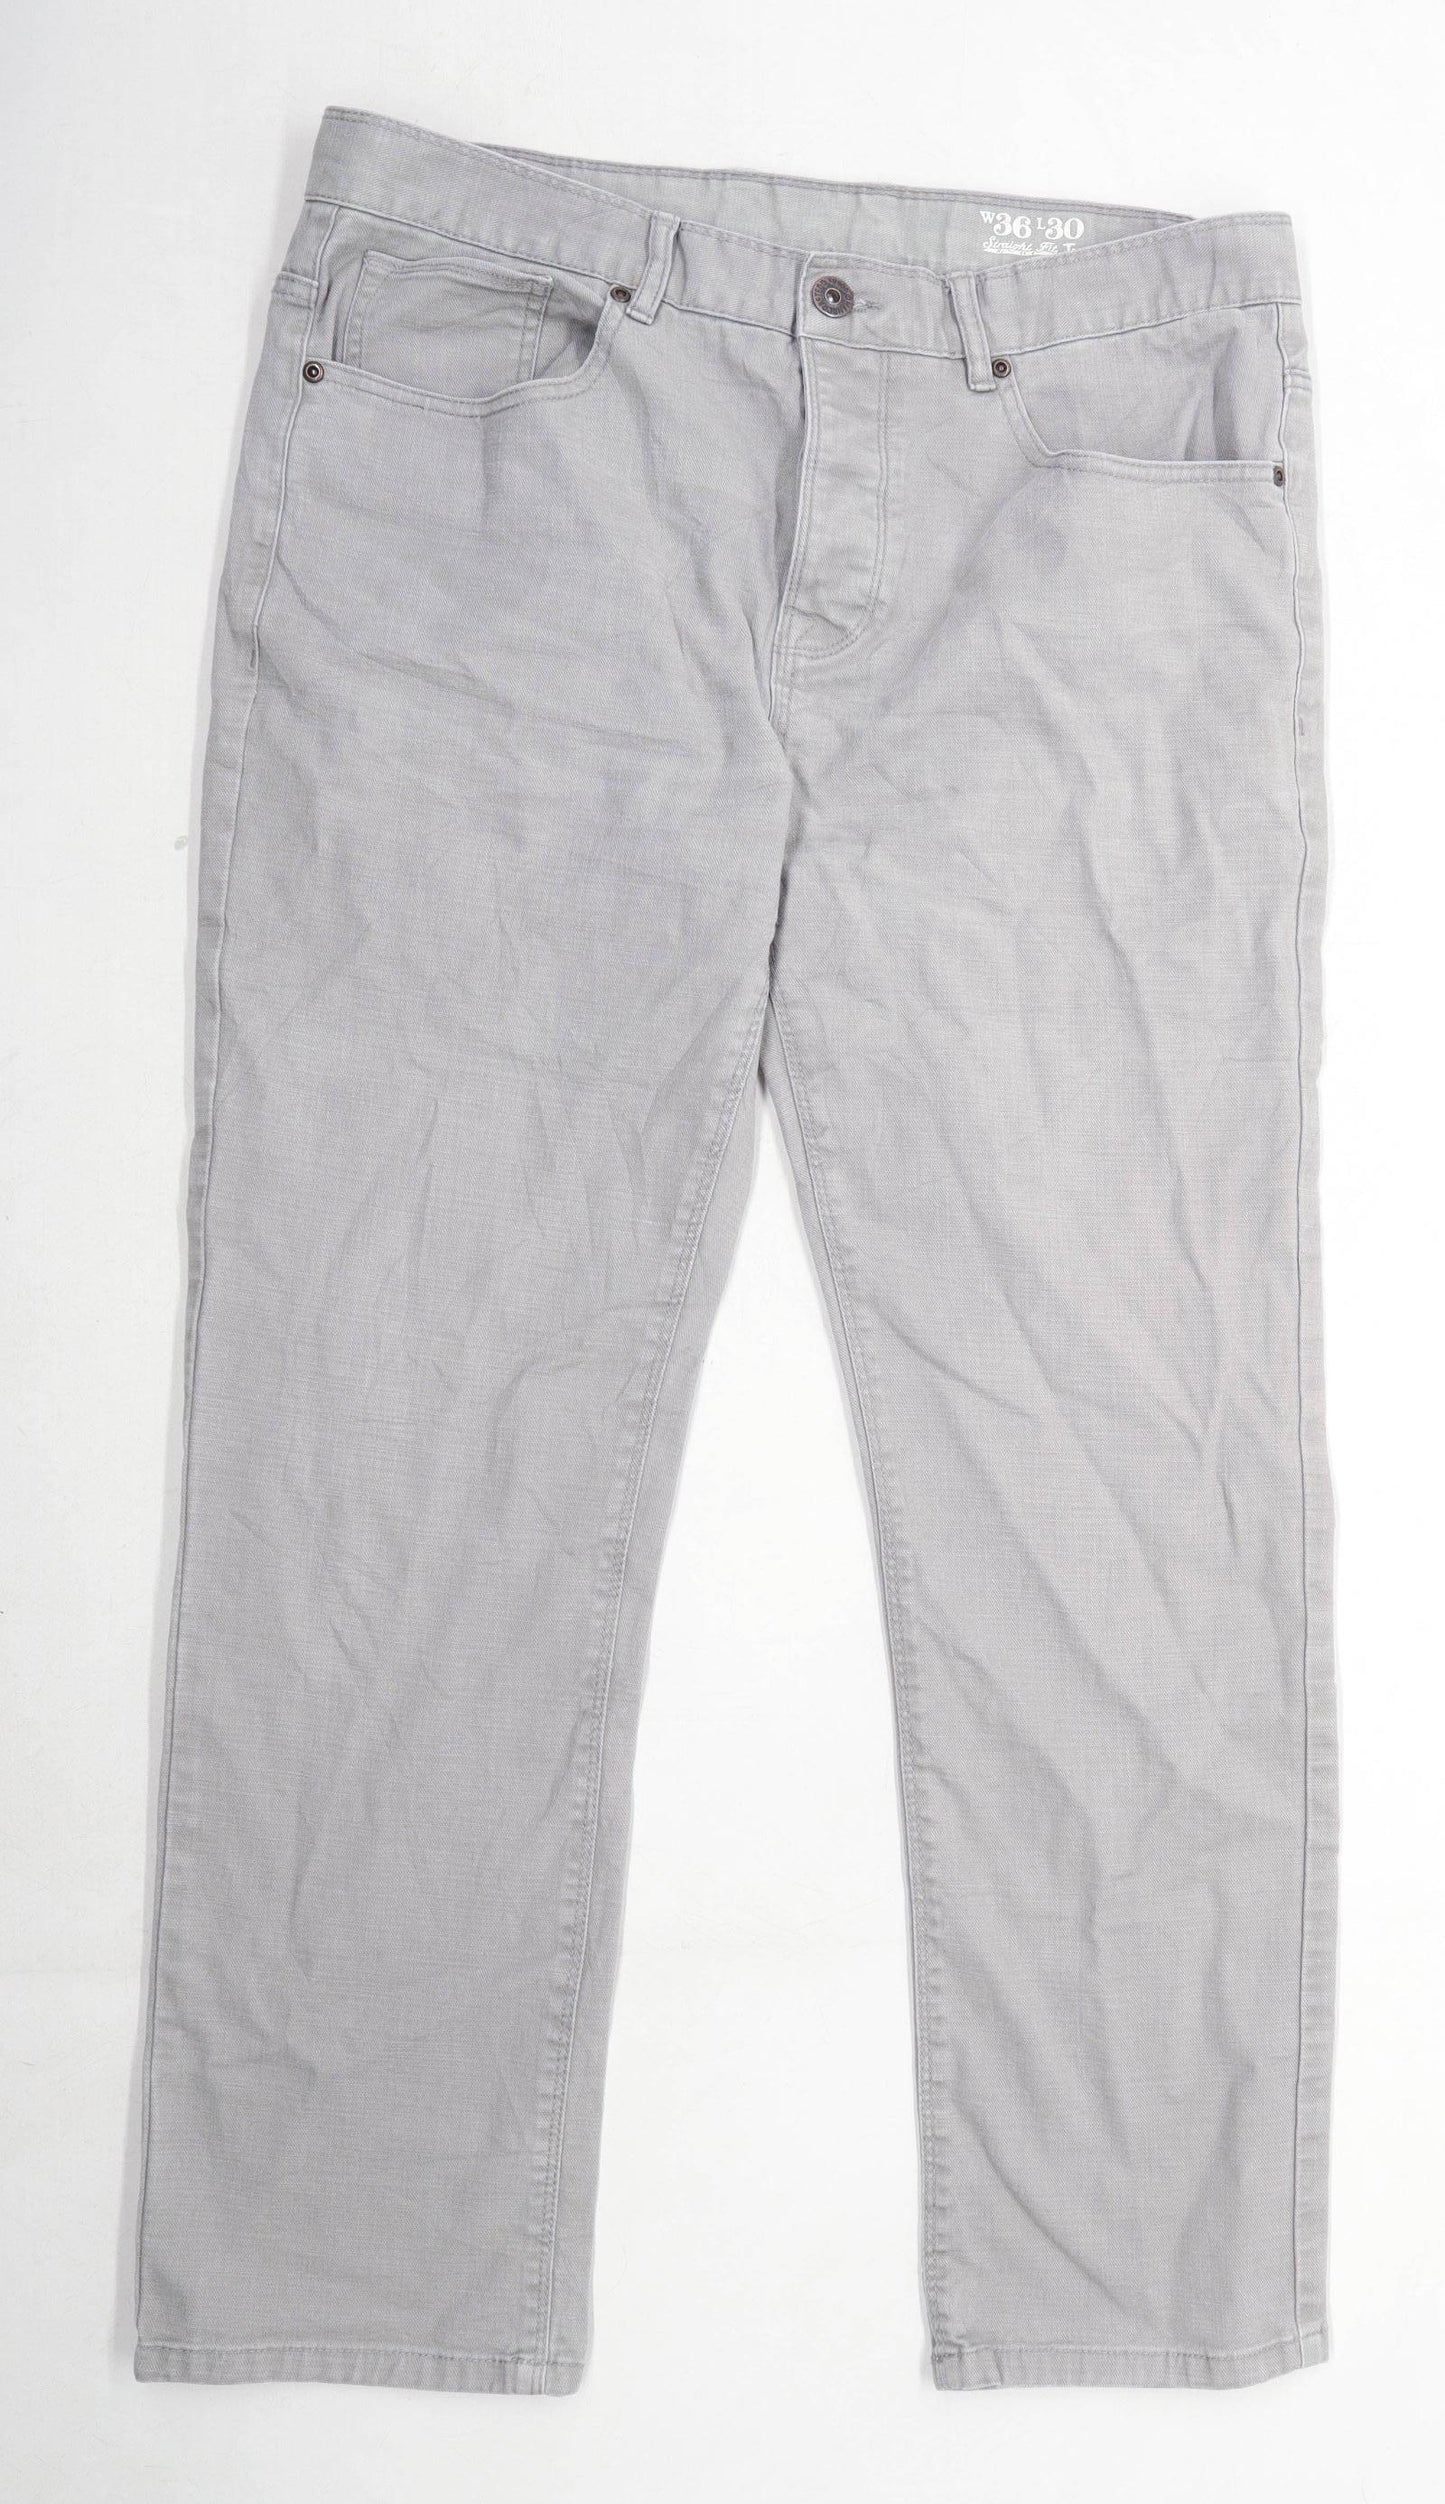 TU Mens Grey Denim Jeans Size W36/L30